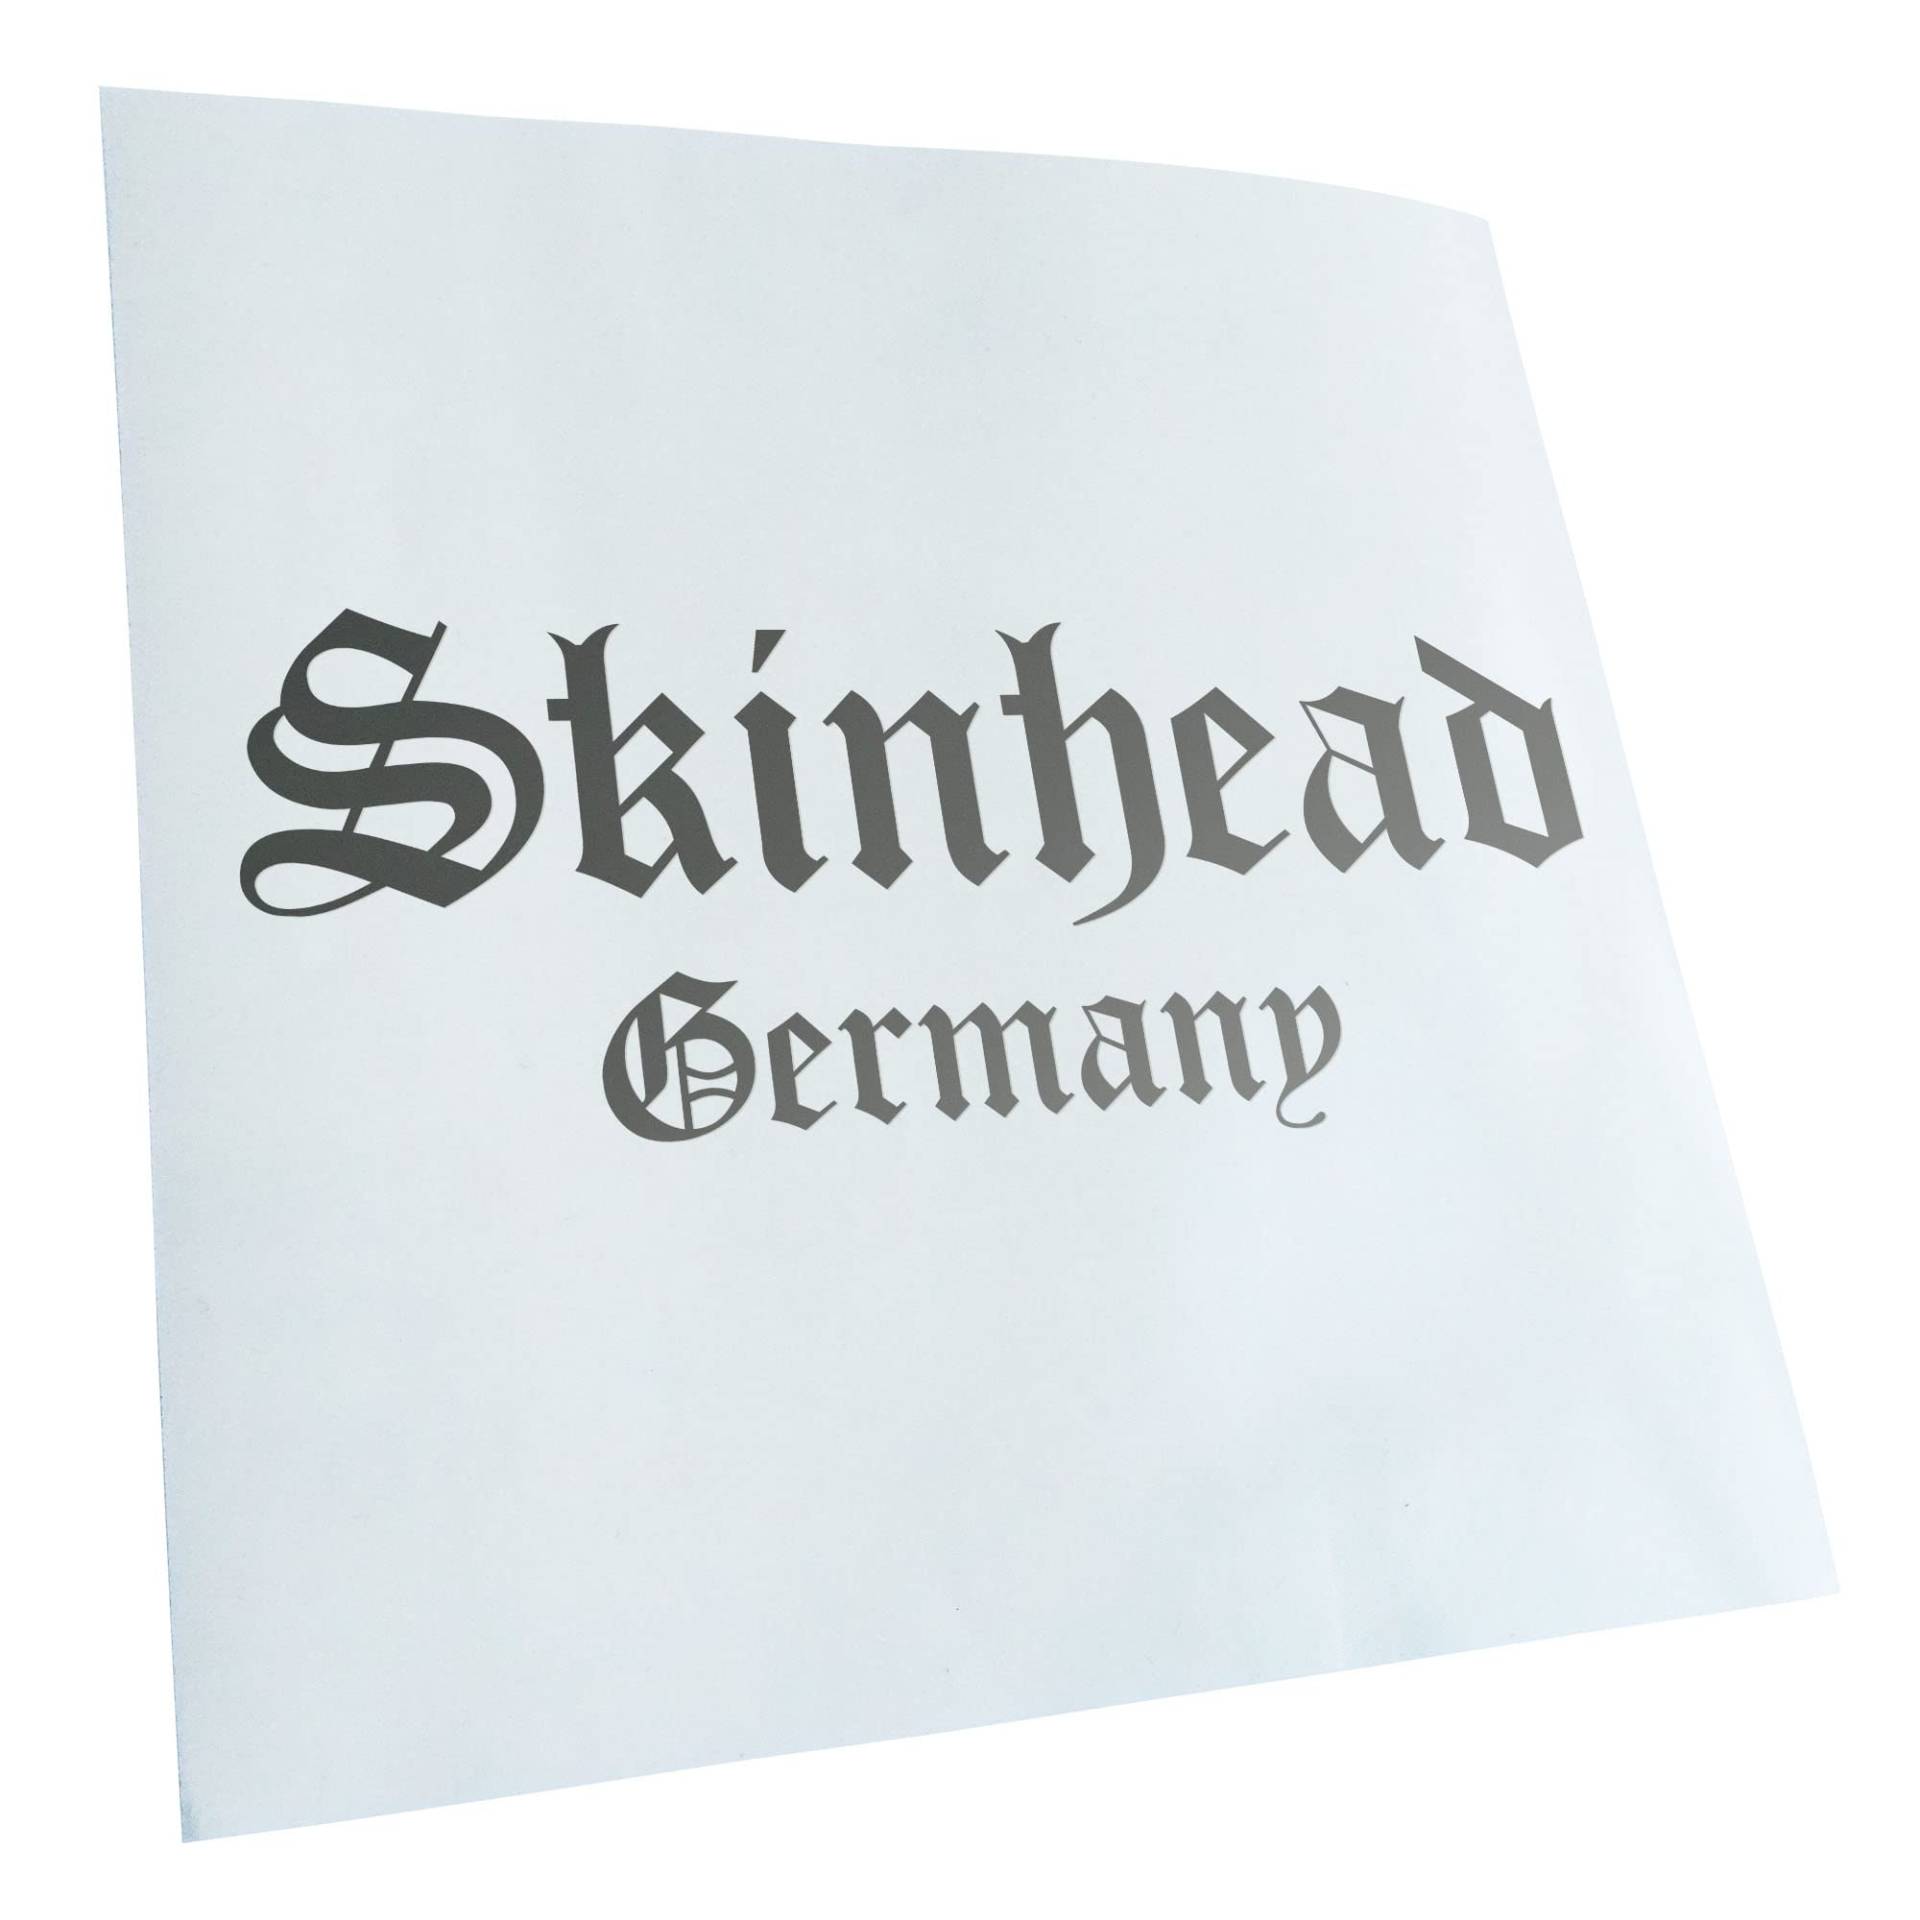 Kiwistar - Autoaufkleber - silber - 40 x 15 cm - Skinhead Germany - Heckscheibenaufkleber - Aufkleber für Auto Kfz Fahrrad, LKW, Truck Mofa von Kiwistar